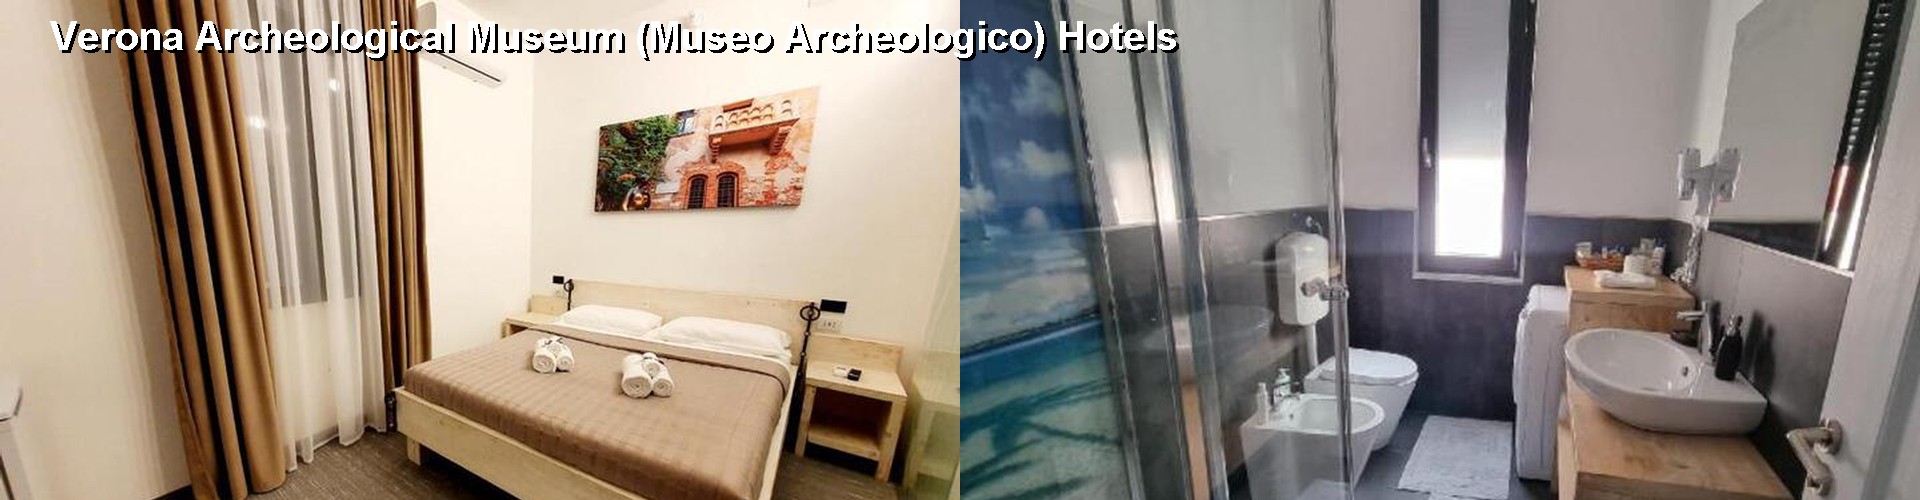 5 Best Hotels near Verona Archeological Museum (Museo Archeologico)